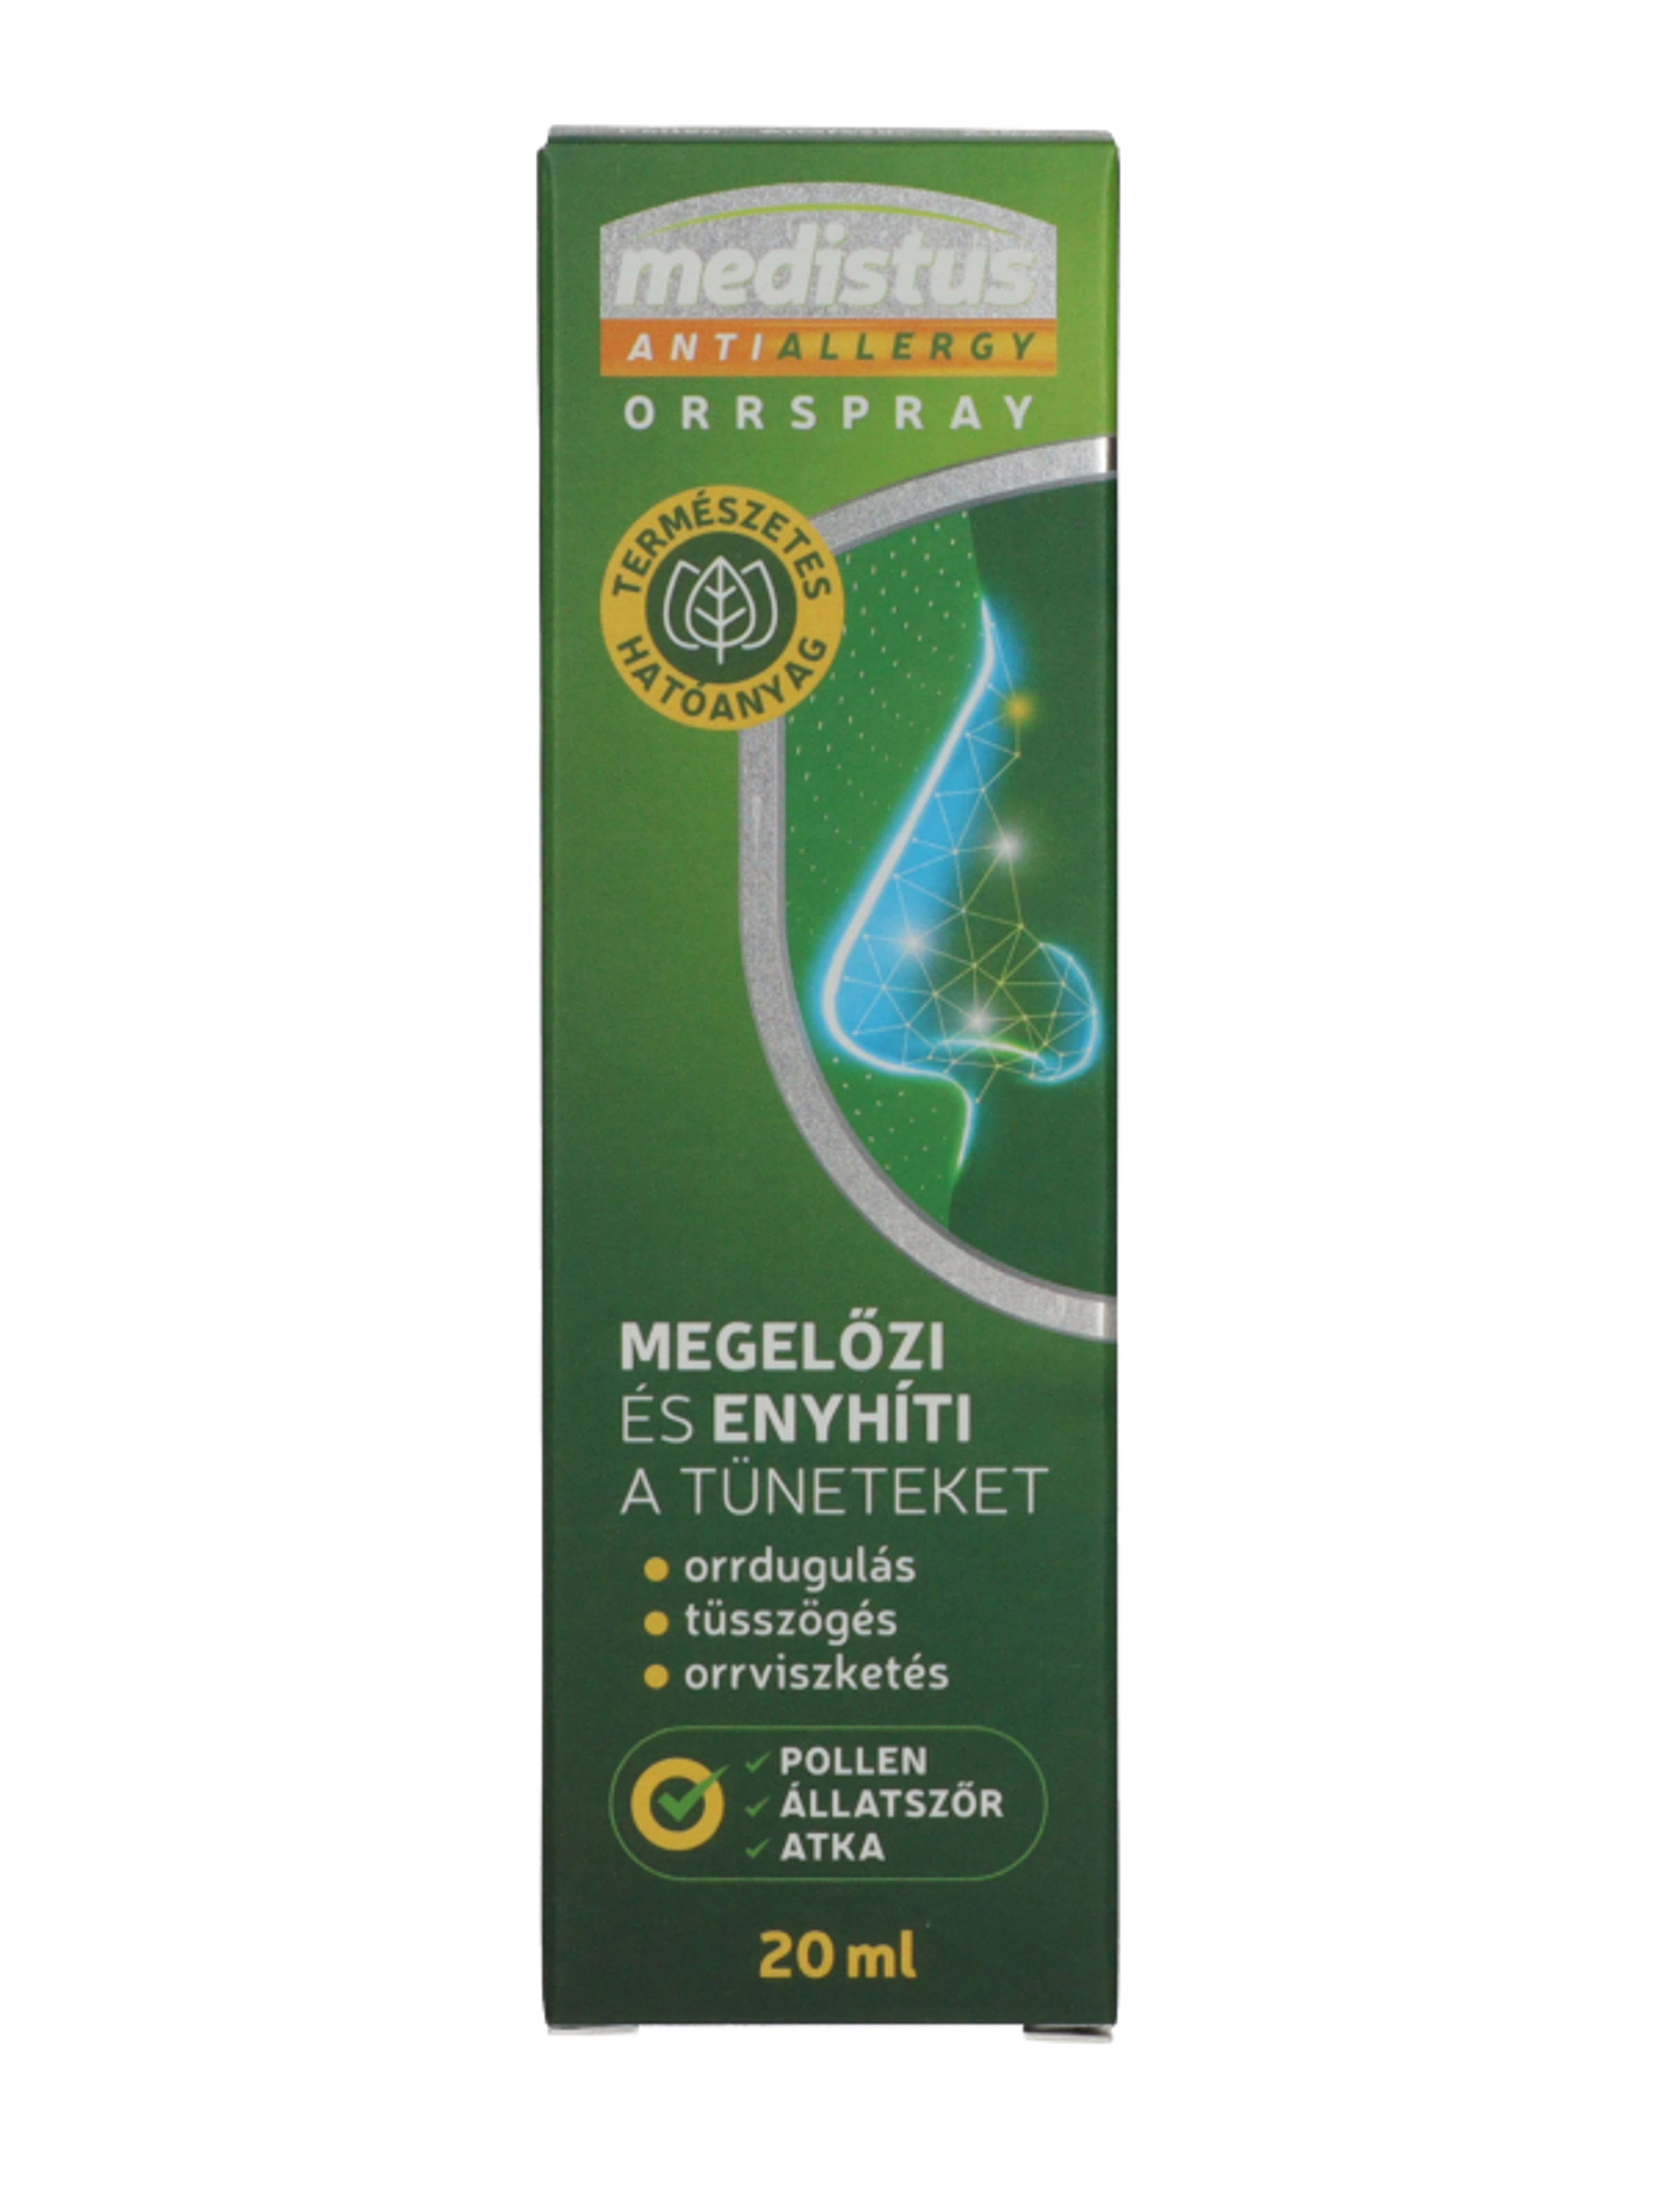 Medistus AntiAllergy orrspray - 20 ml